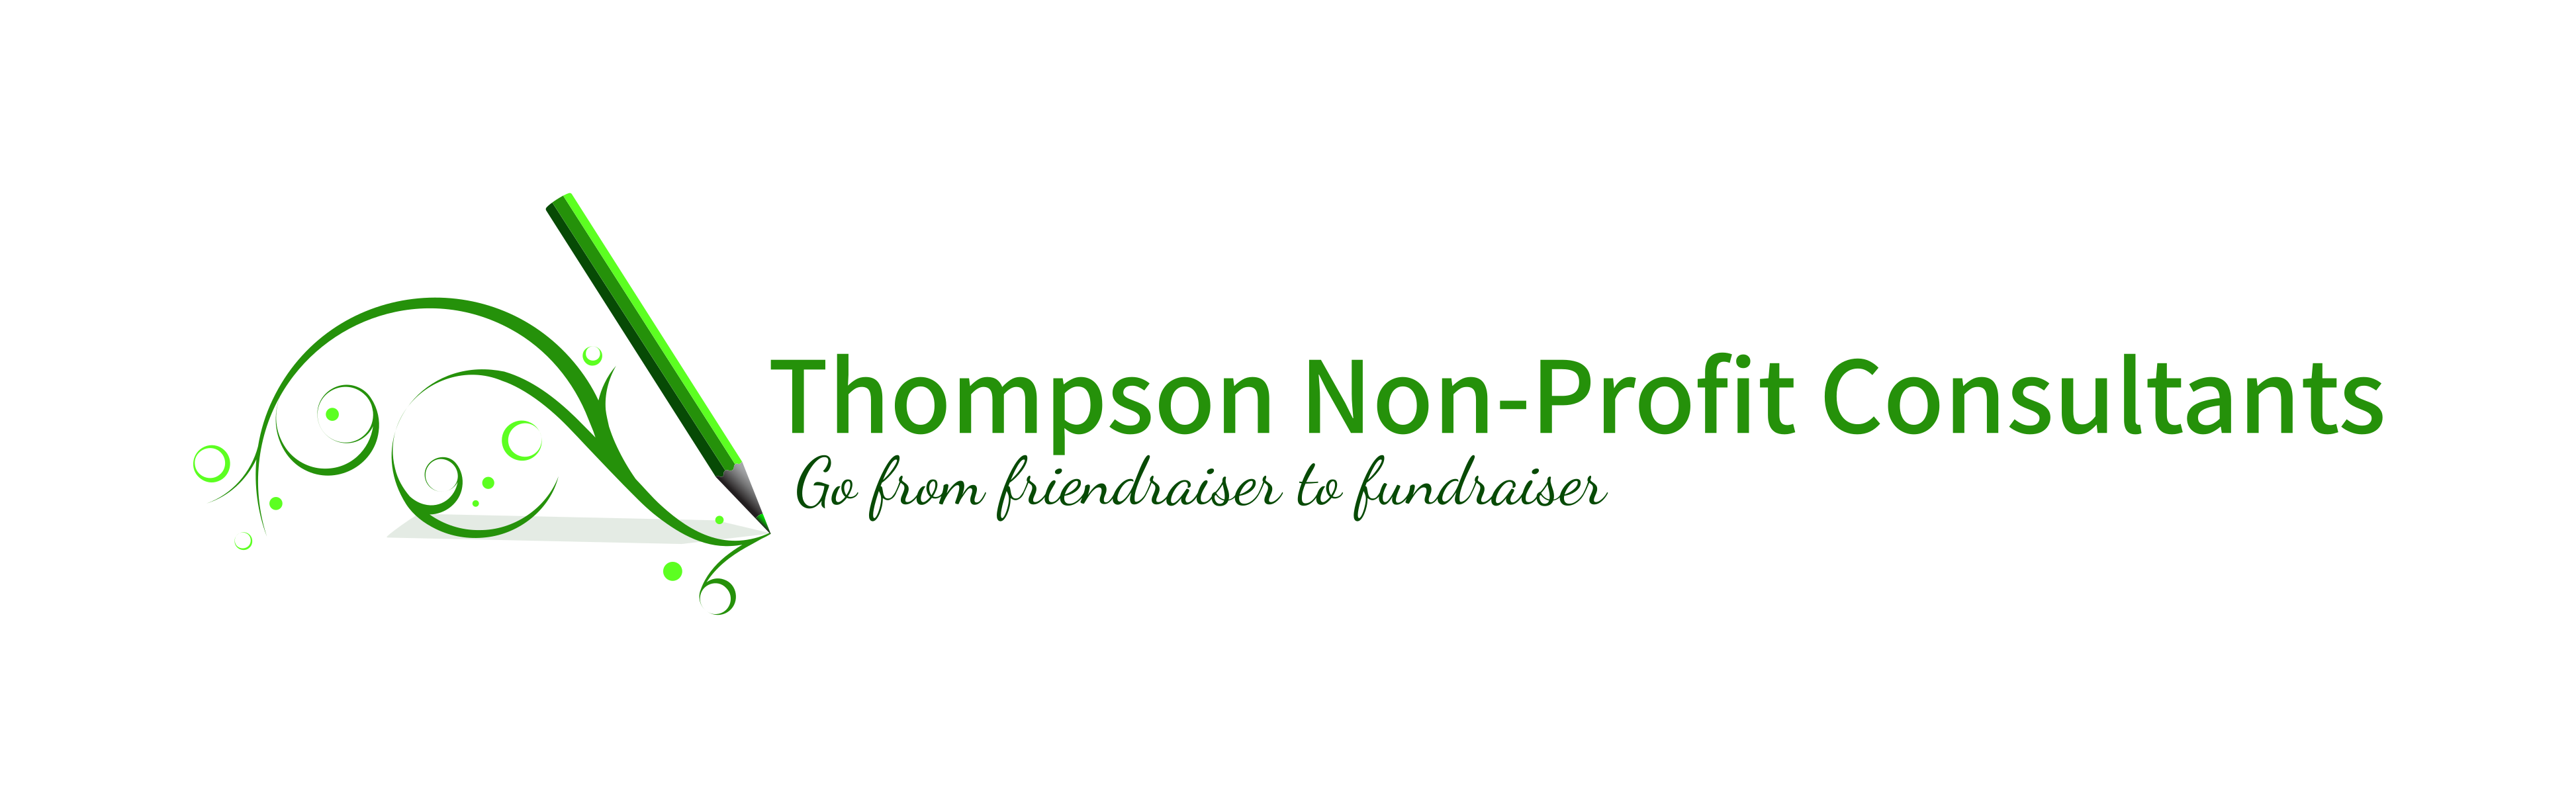 Thompson Non-Profit Consultants